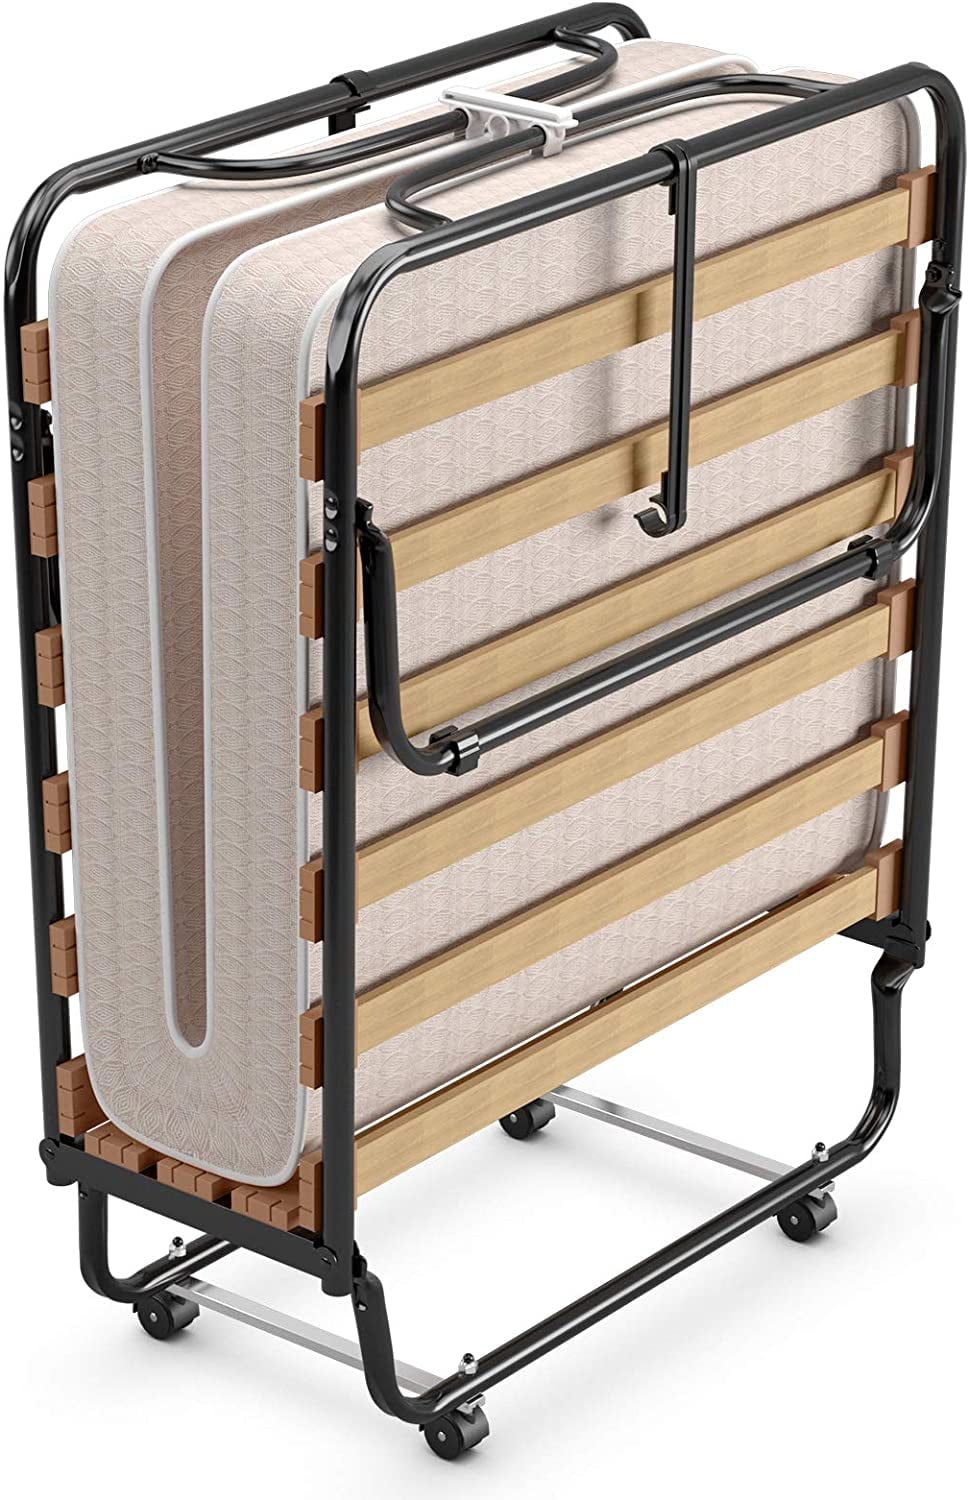 Details about   Folding Portable Guest Bed Air Flow Mattress Cot Roll Away Sleeper Steel Frame 